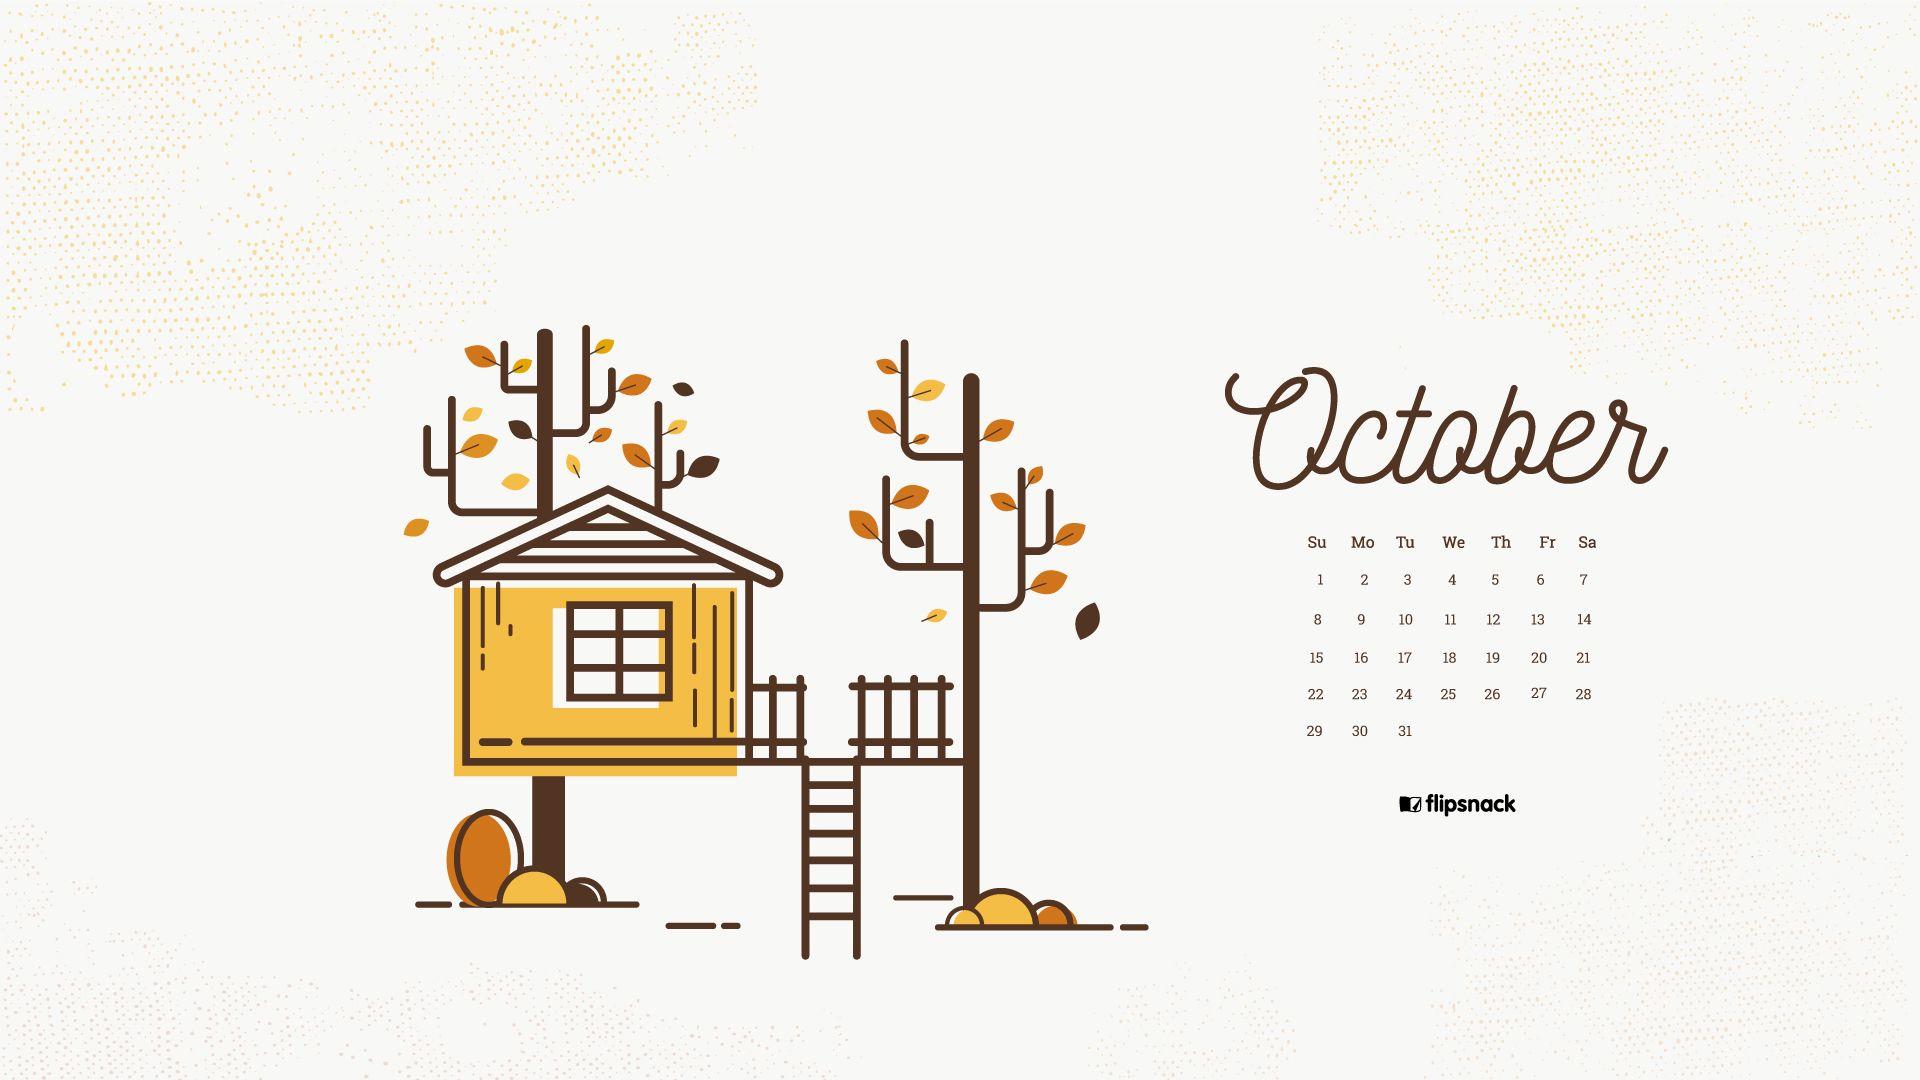 October 2017 calendar wallpaper for desktop background